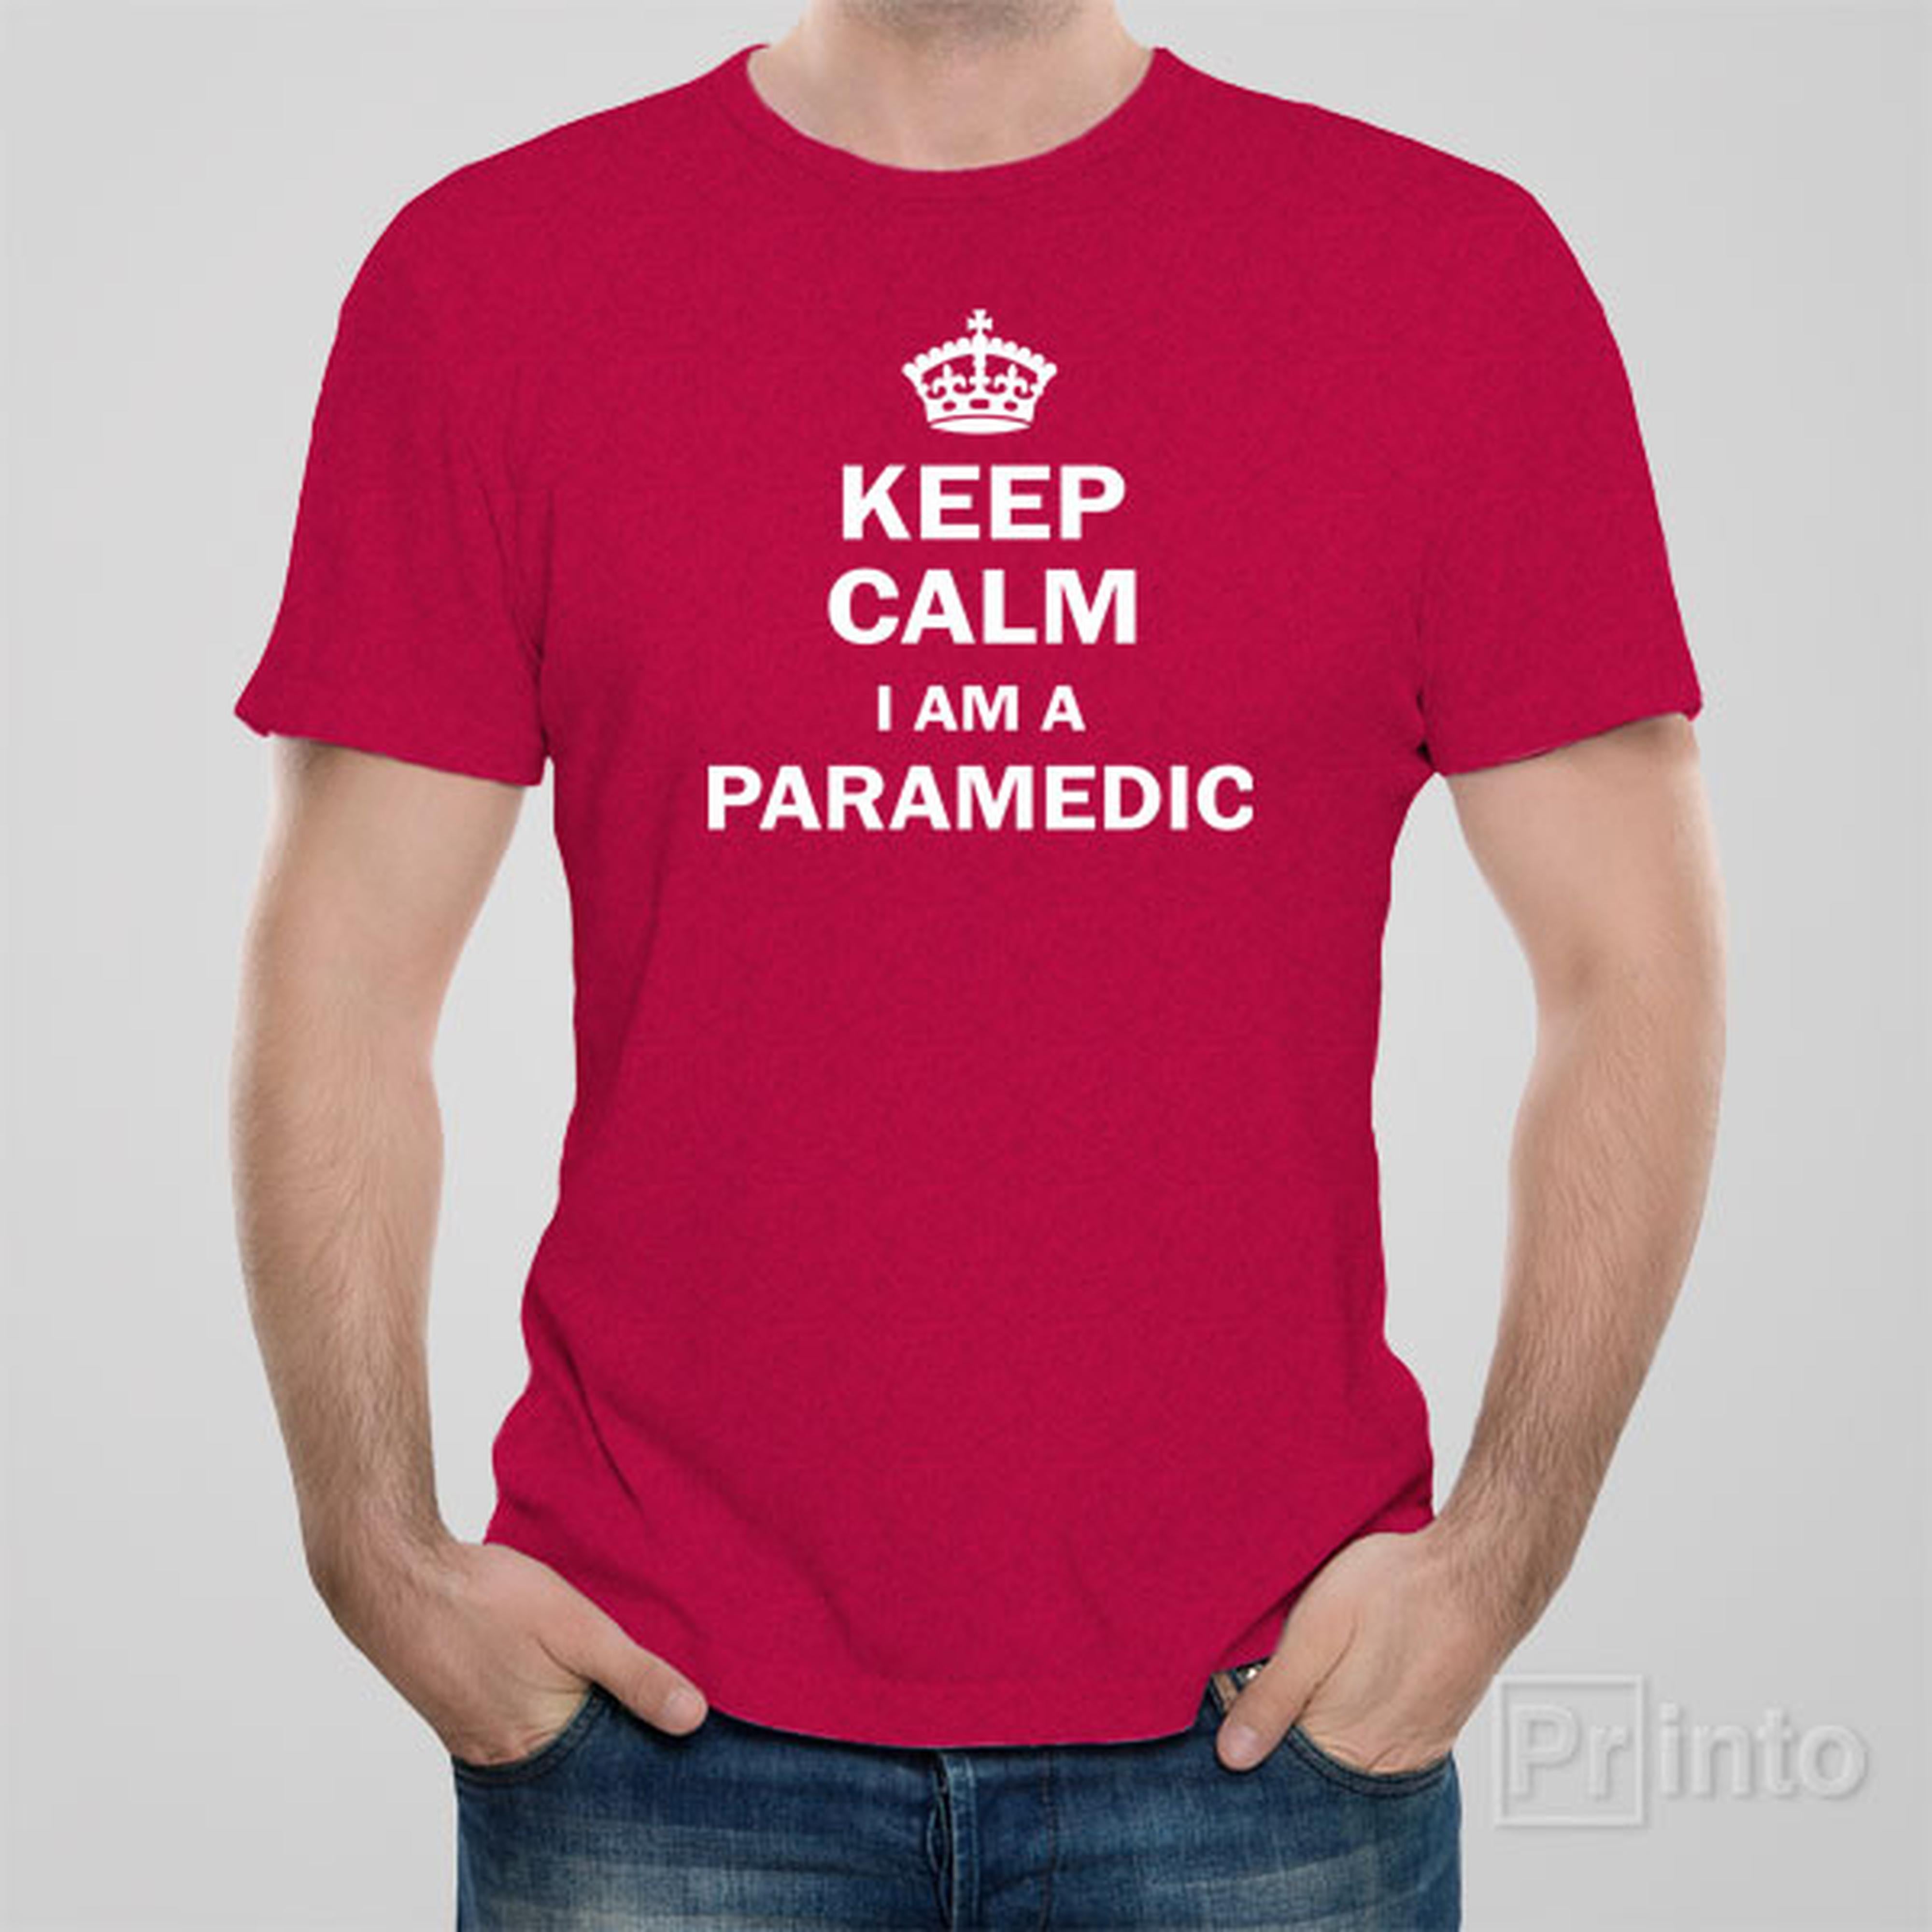 keep-calm-i-am-a-paramedic-t-shirt